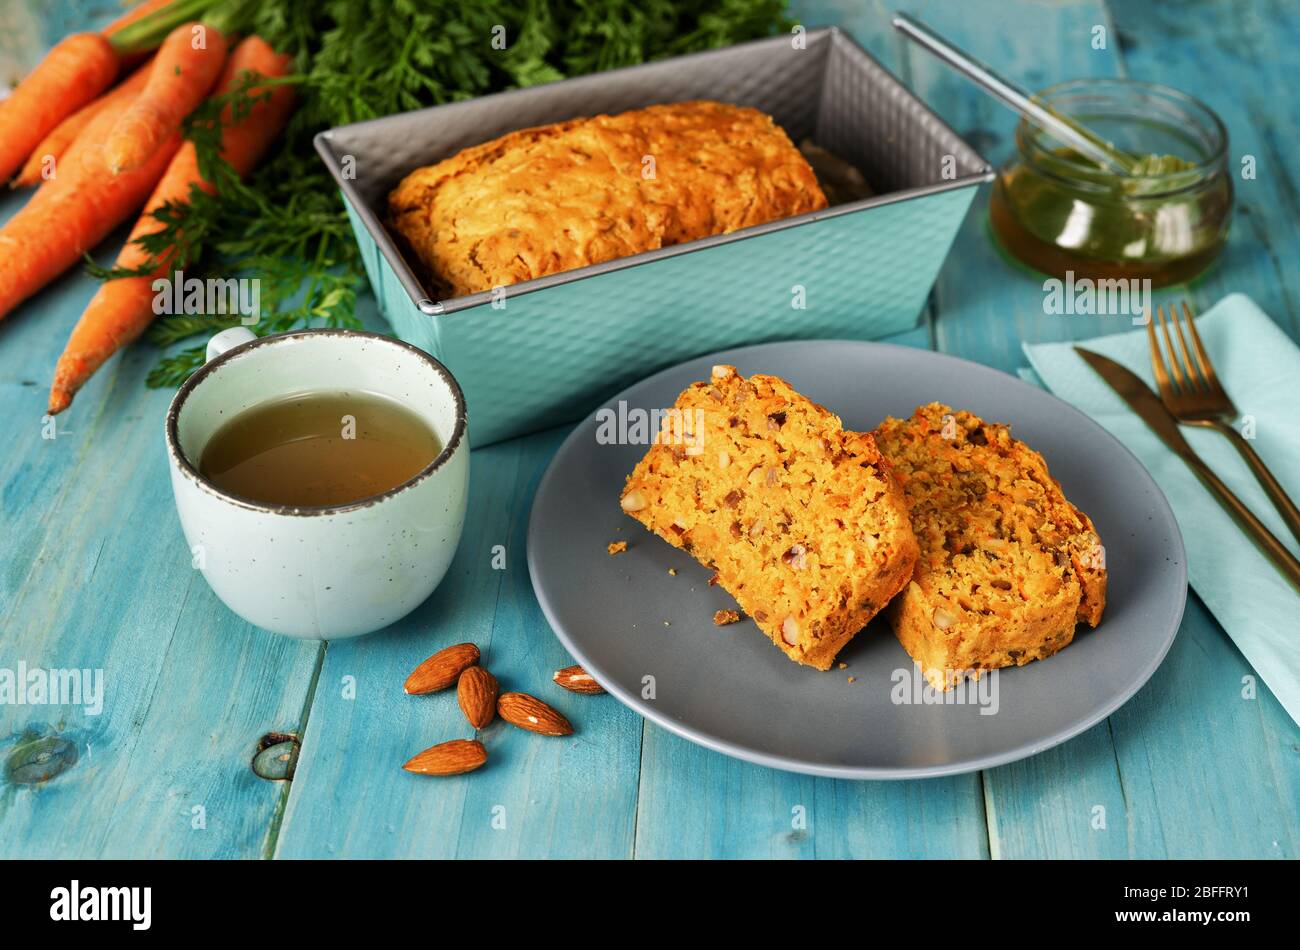 Delicious vegan carrot cake on turquoise blue background Stock Photo